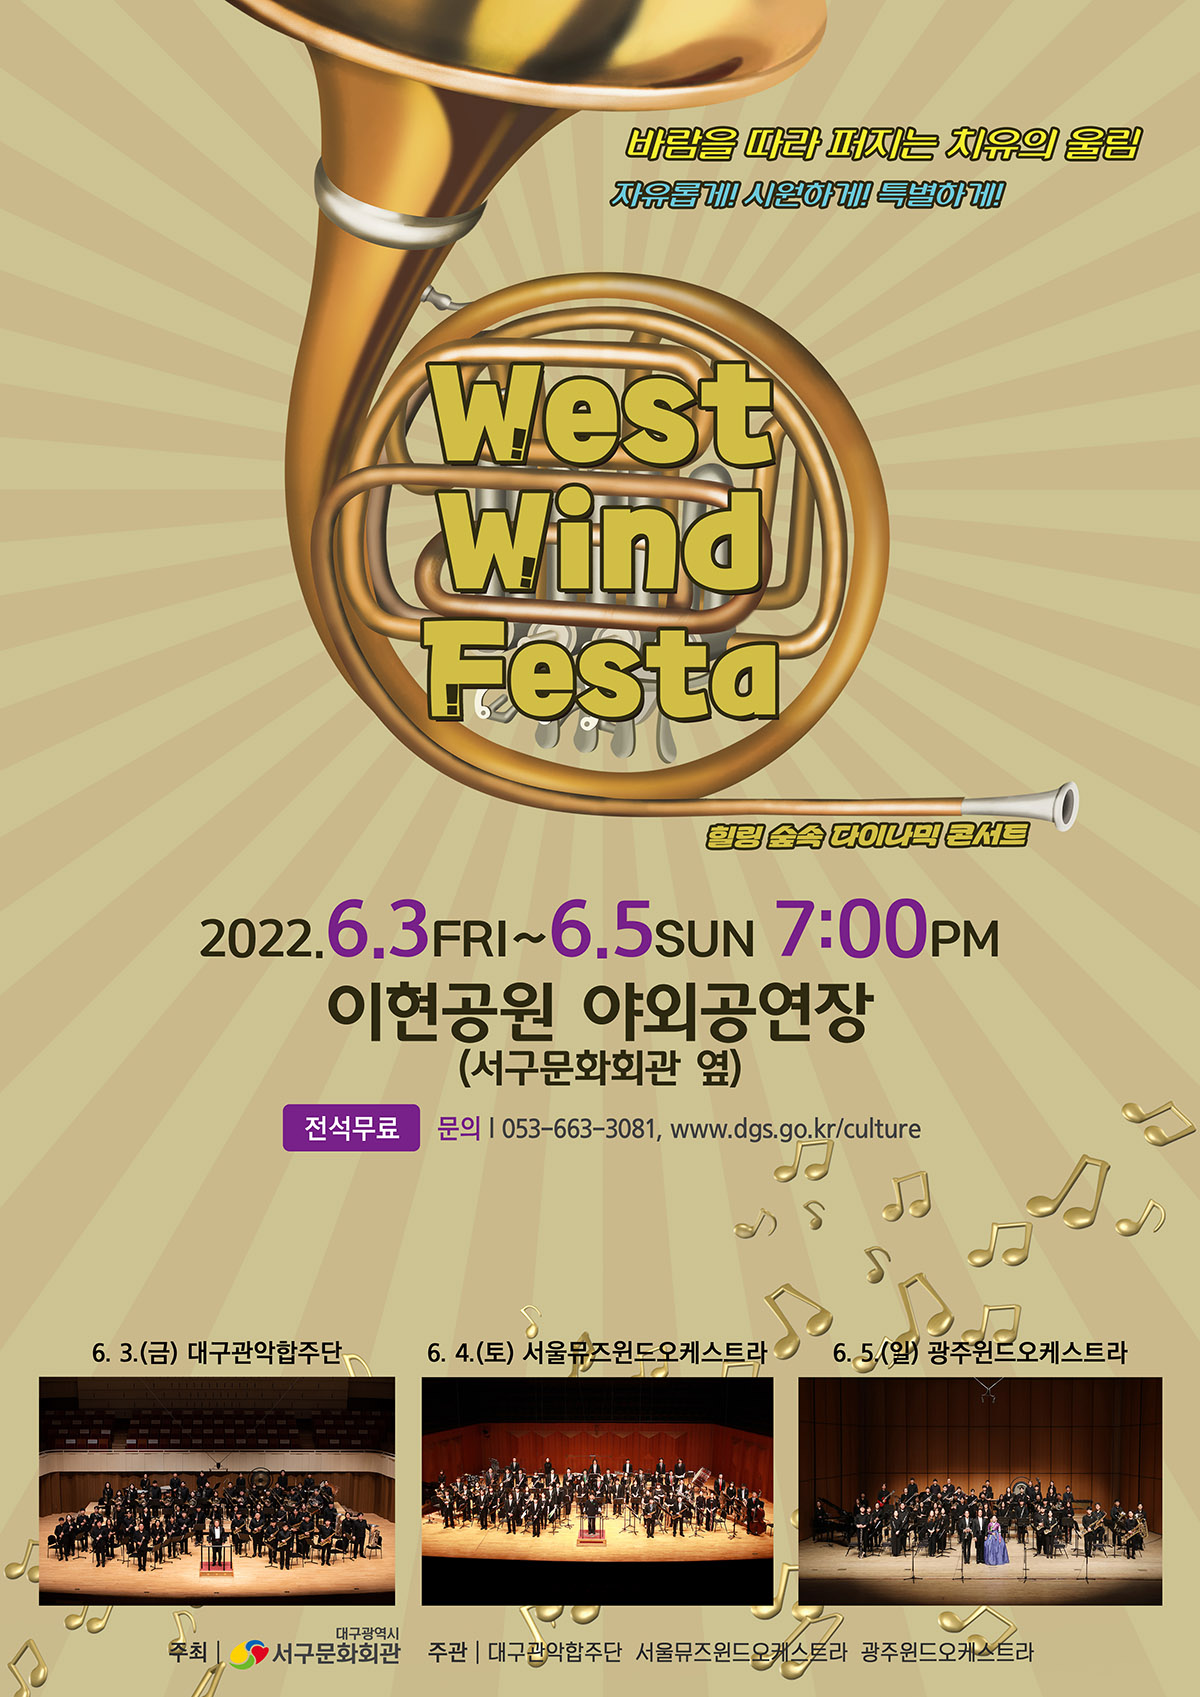 west wind festa